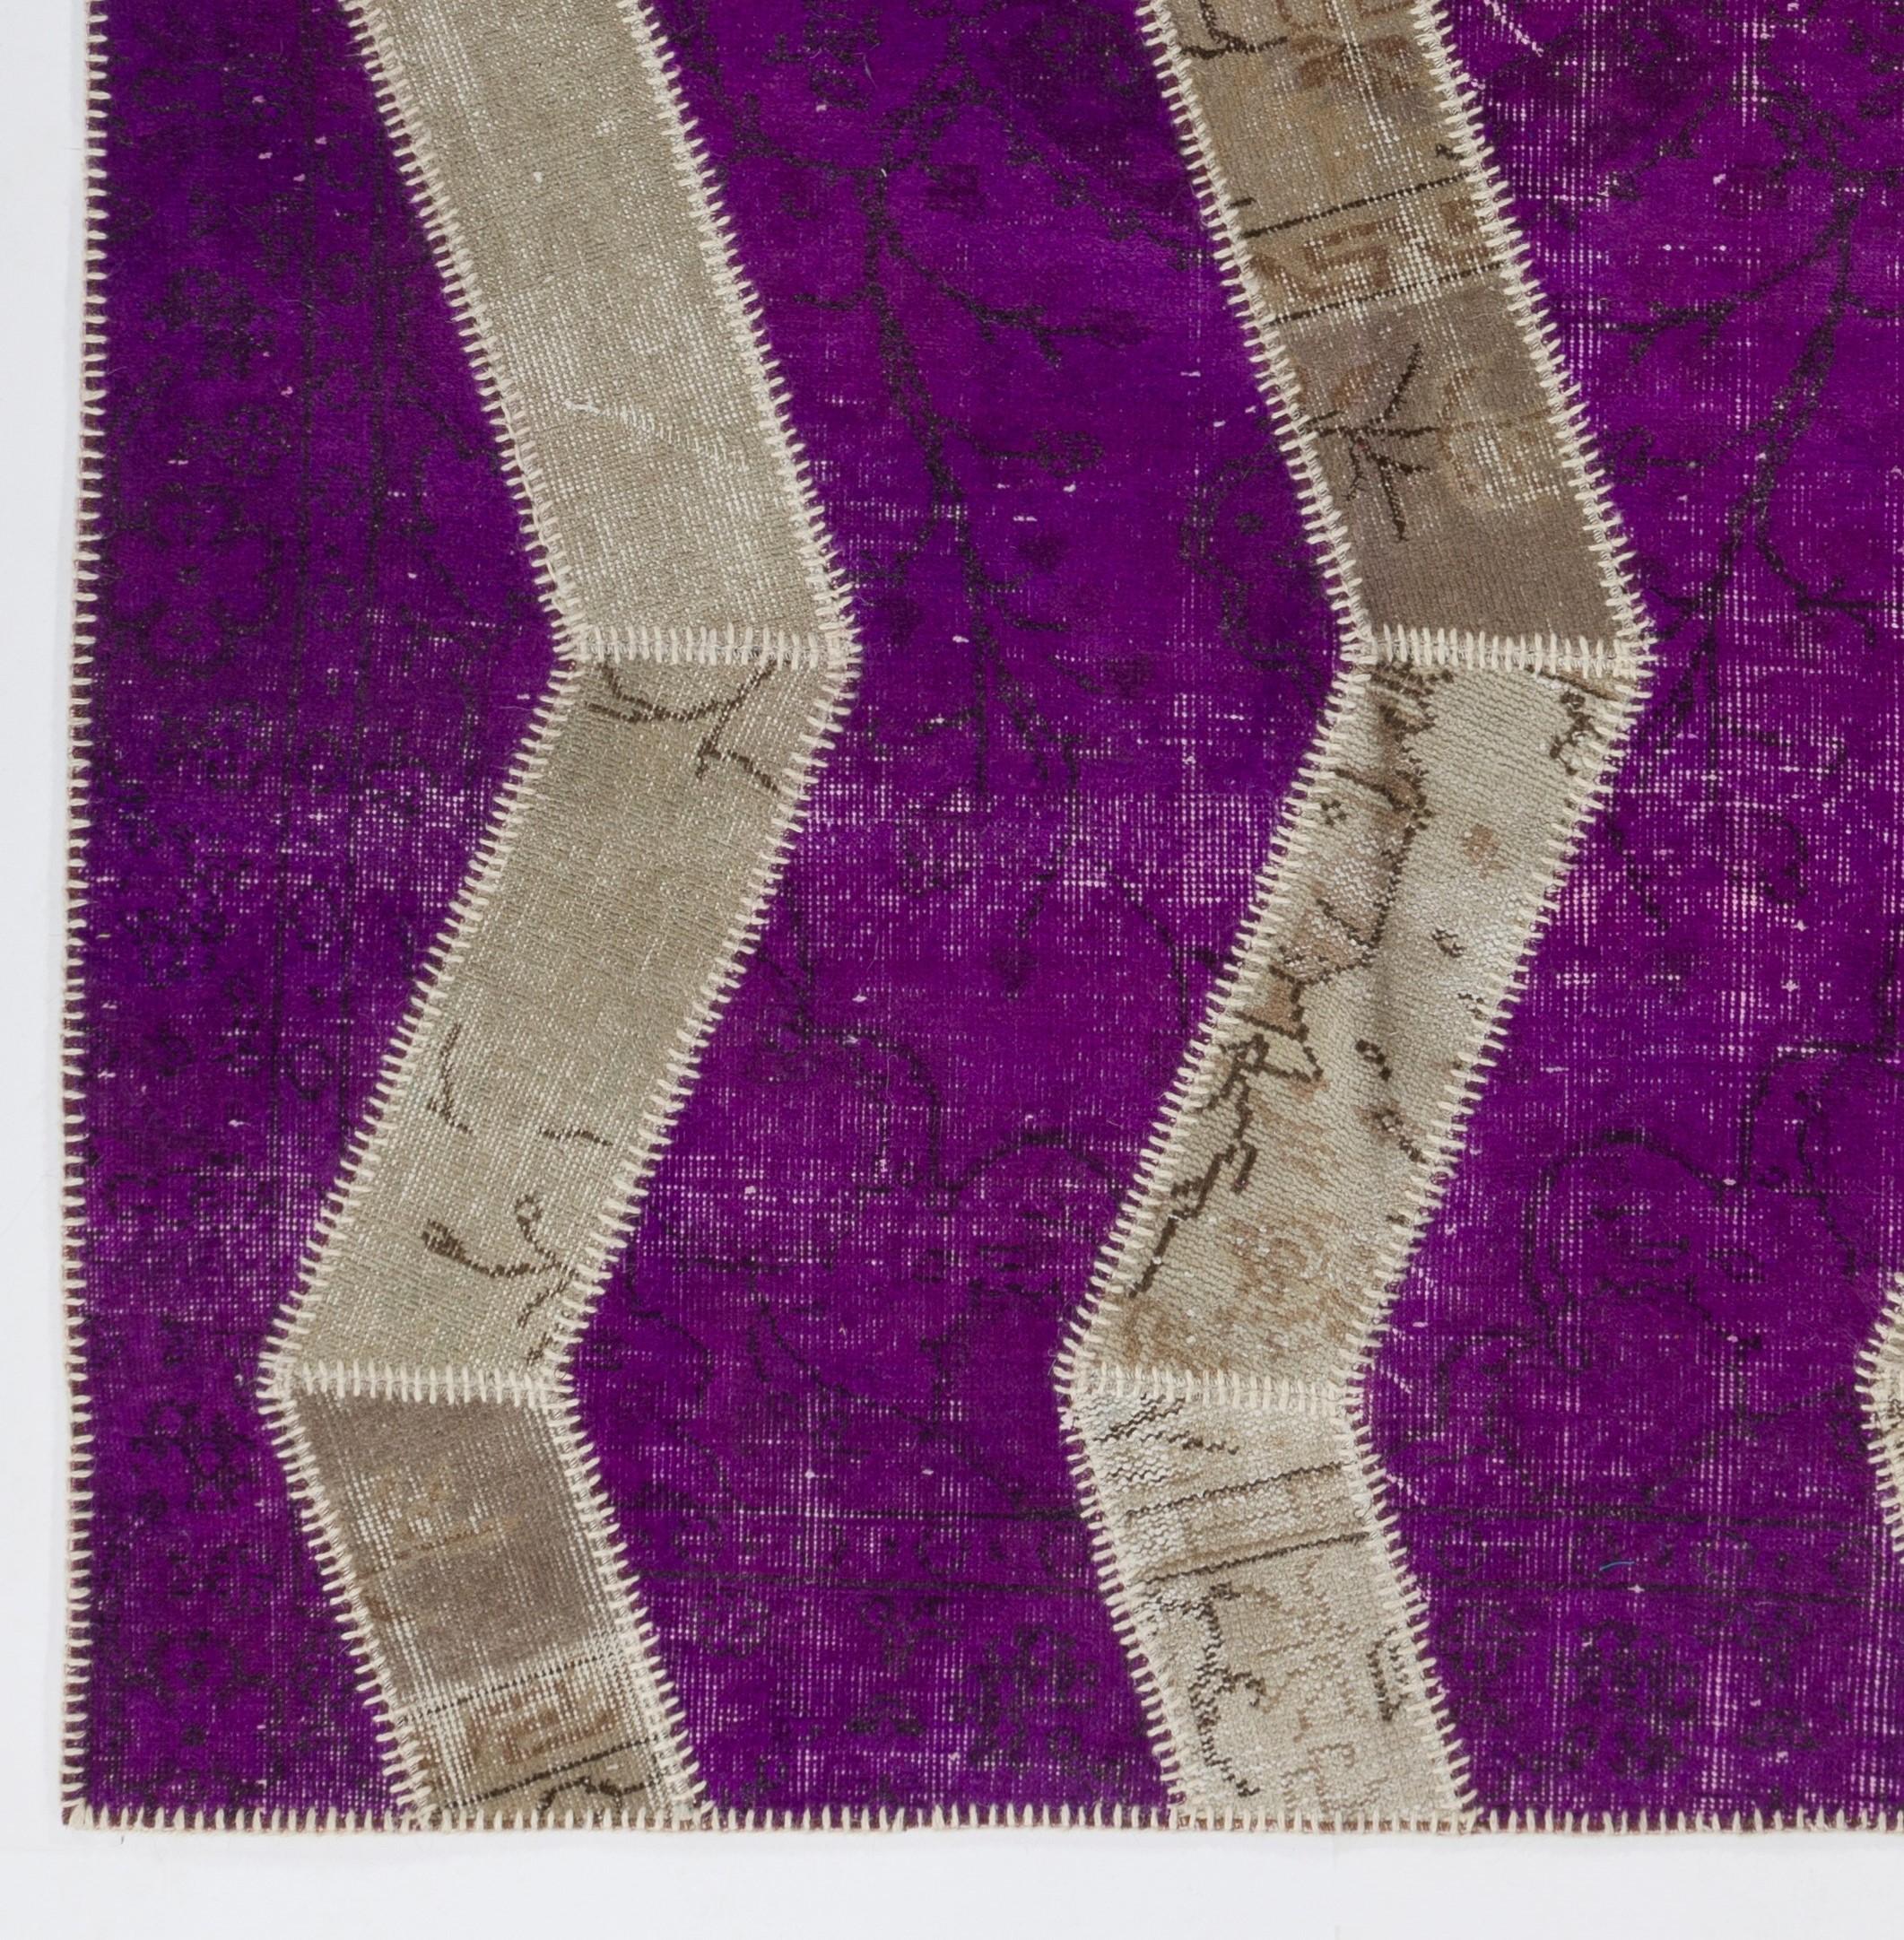 Contemporary Zig Zag Design Patchwork Rug, Purple, Beige & Sand Colors. Custom Modern Carpet For Sale